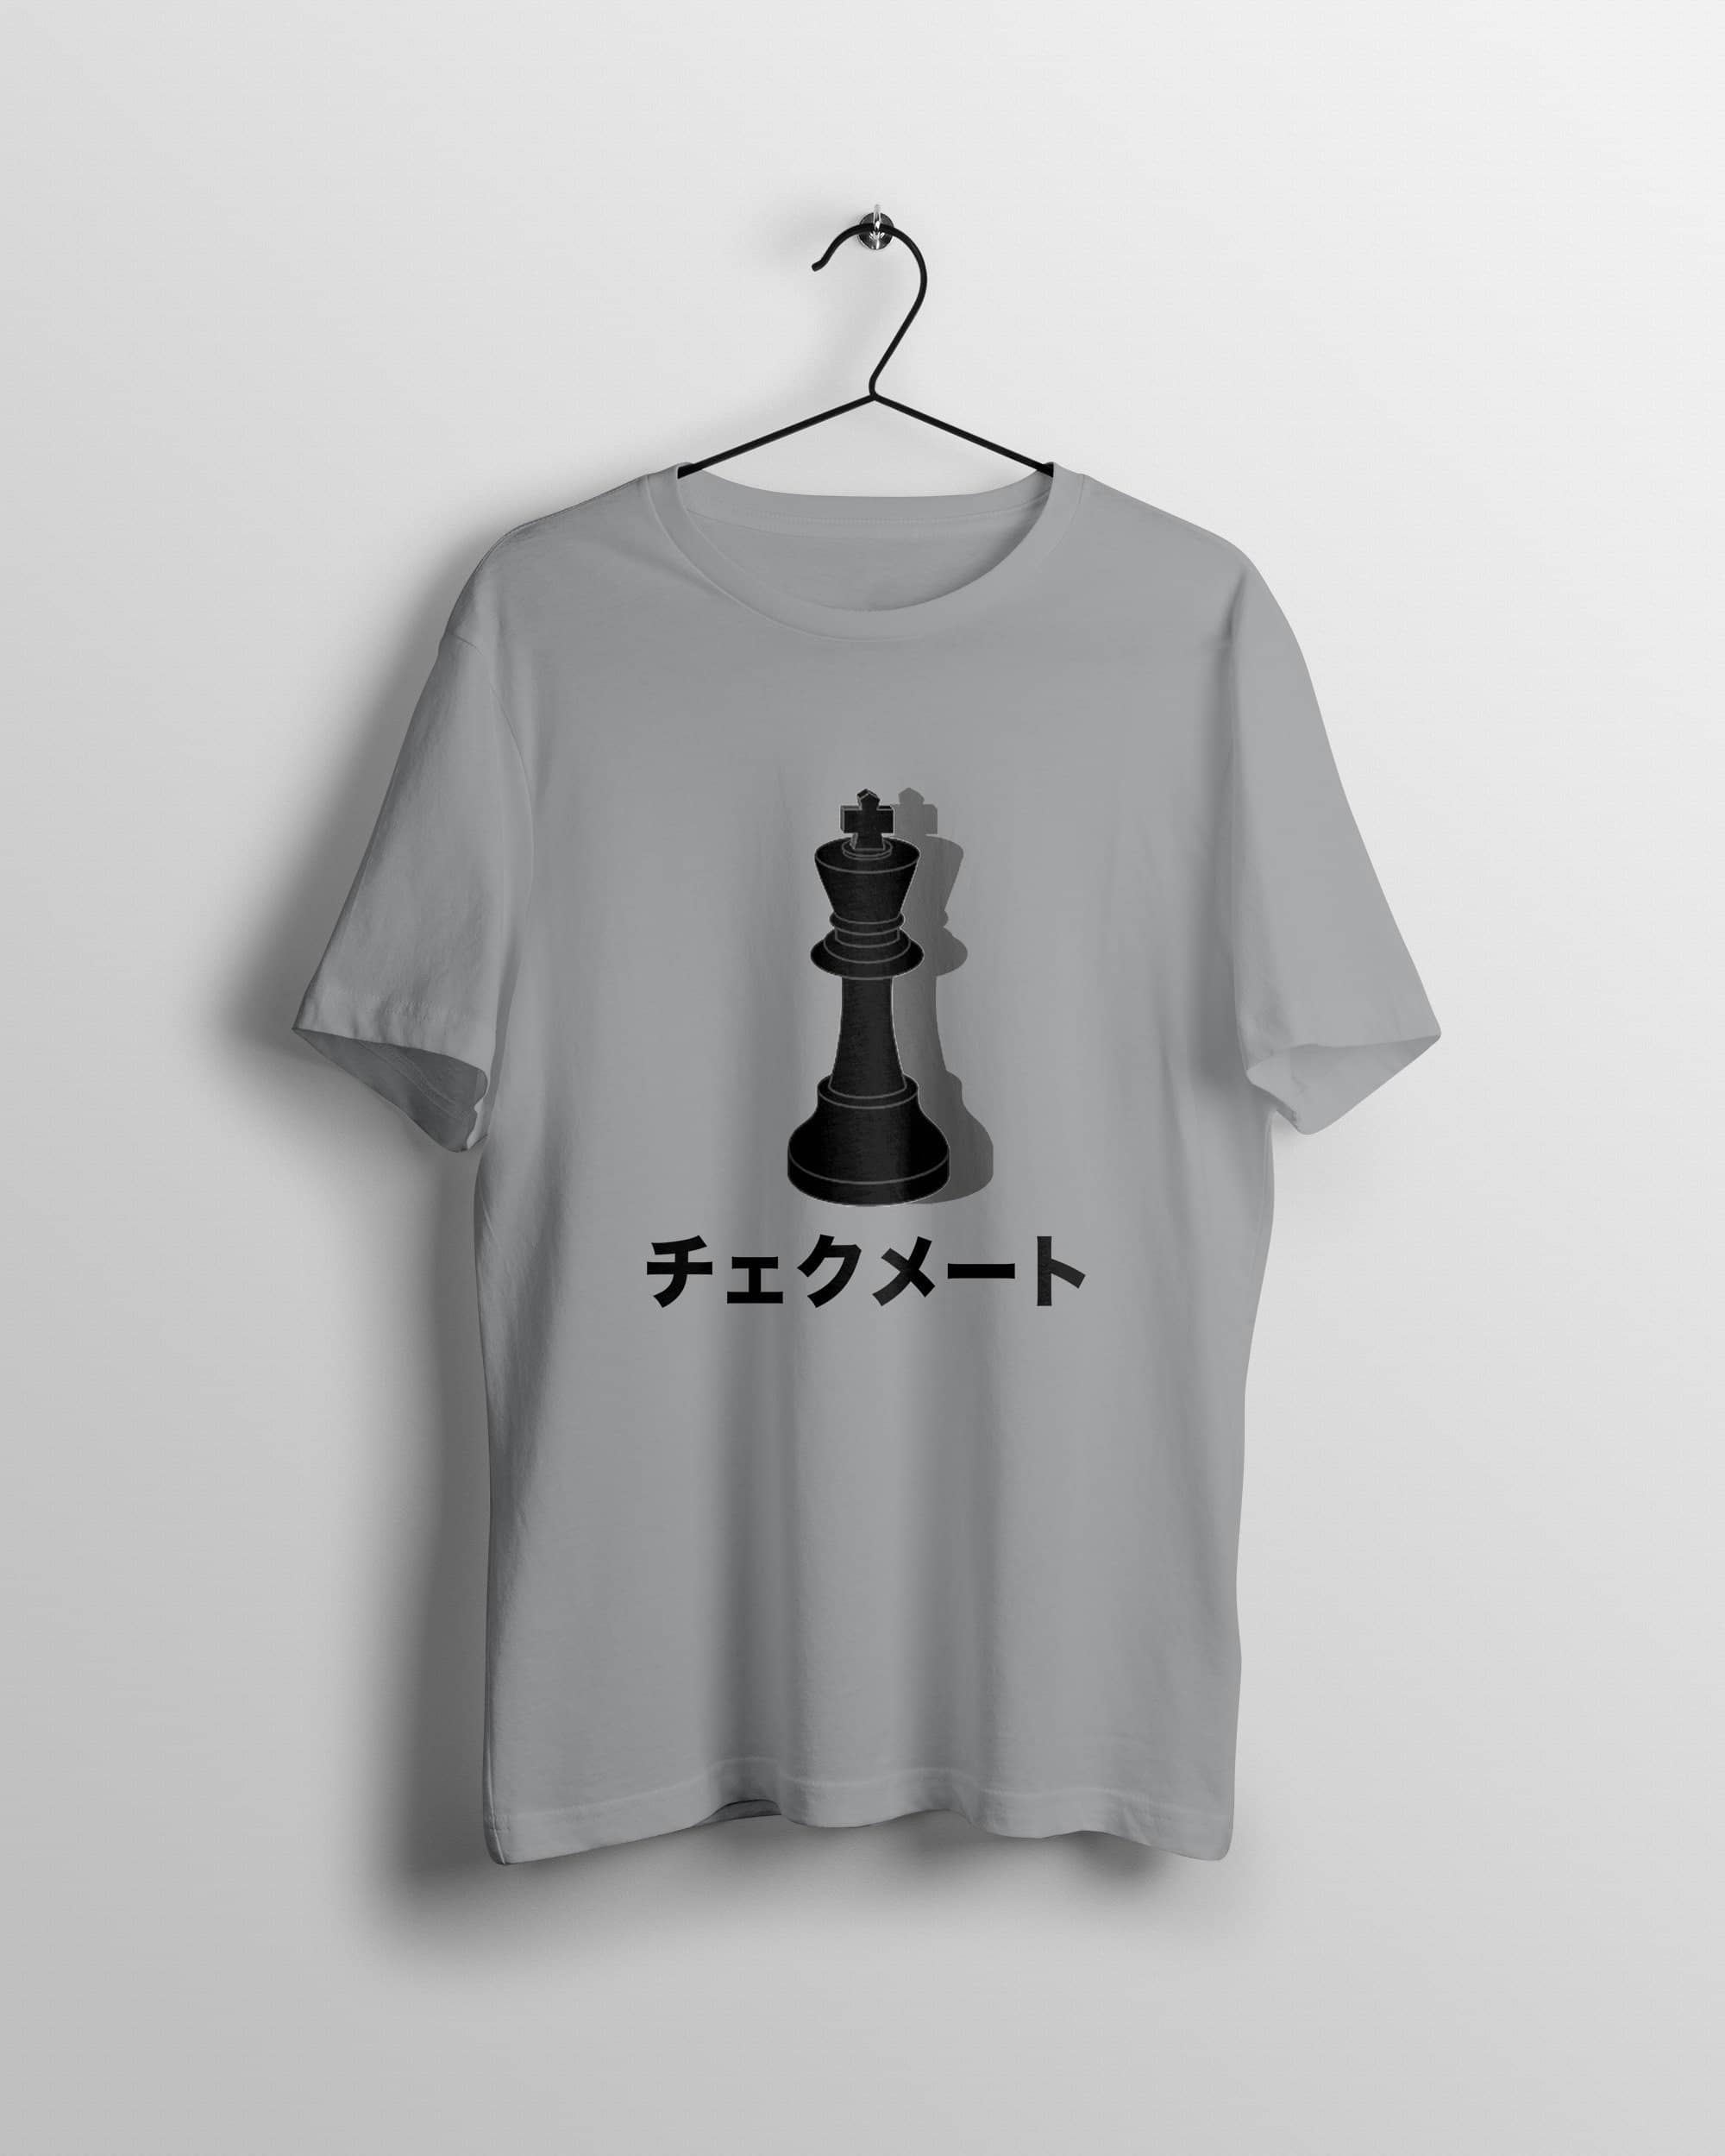 friktion måske Påstand Anime Chess T Shirt - Anime Apparel | Imouri